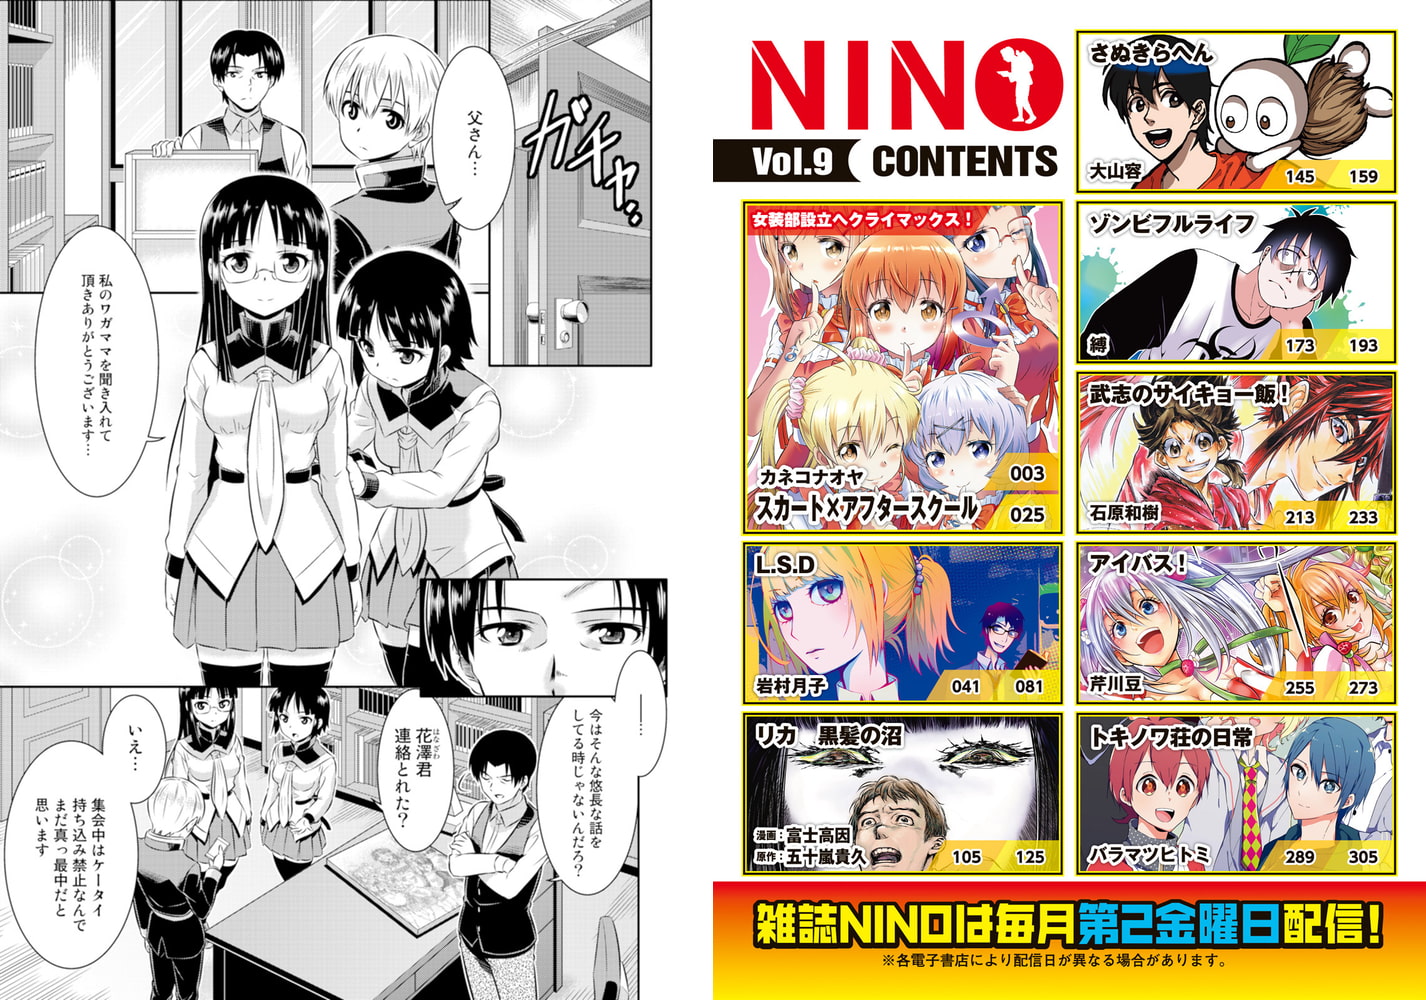 Nino Vol 9 ライブコミックス Dlsite Comipo